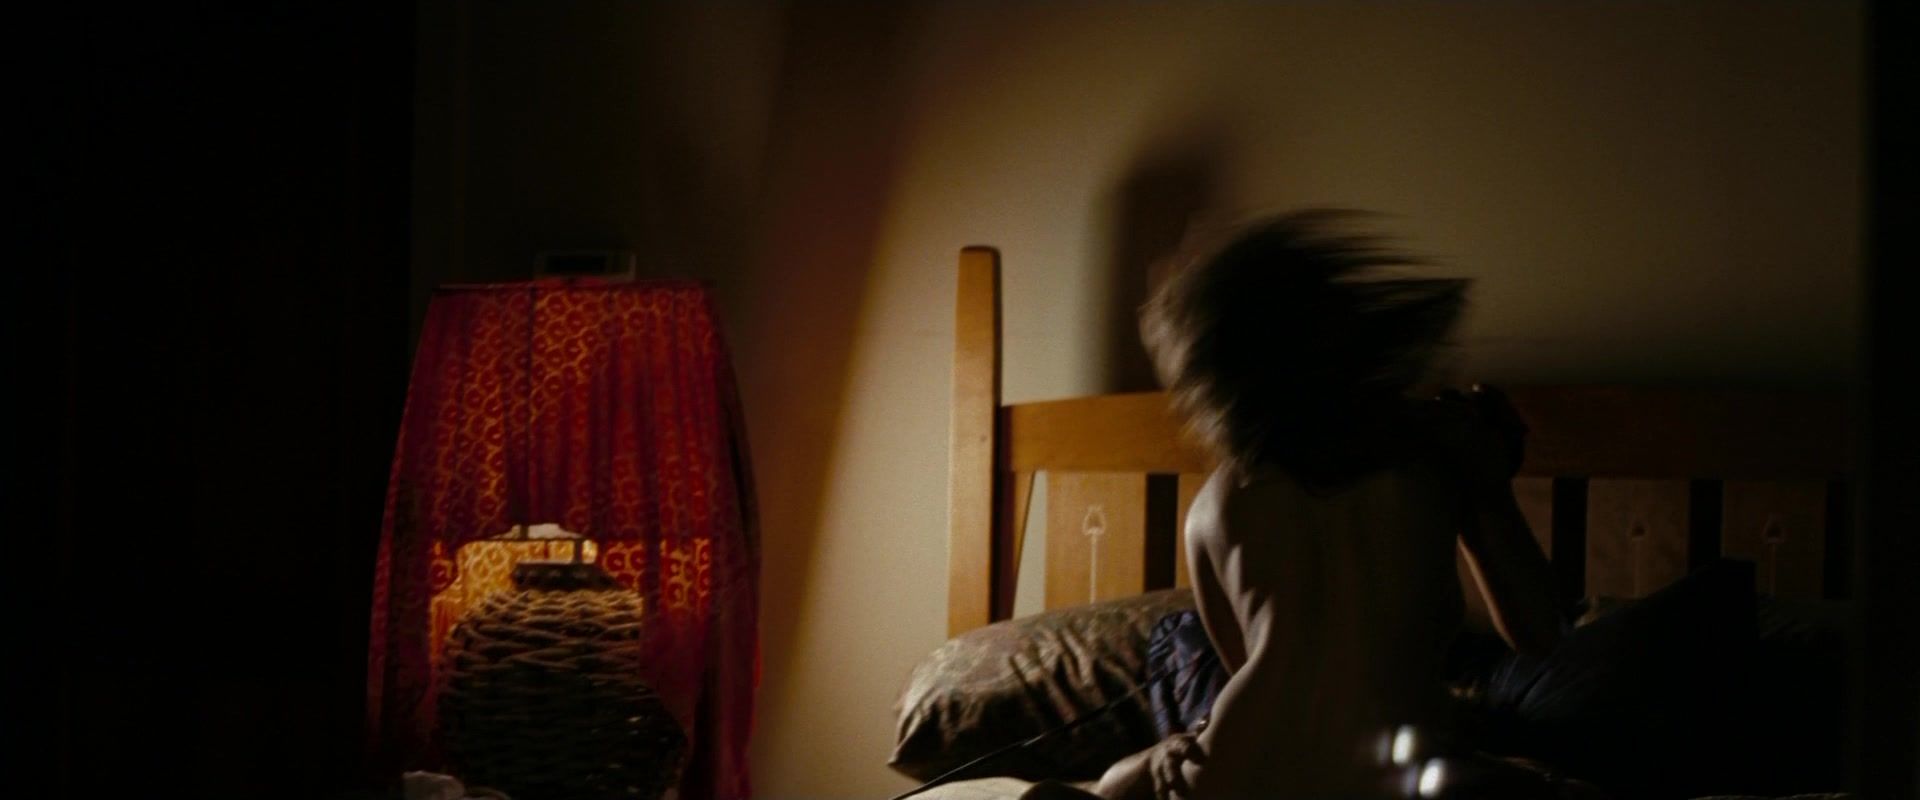 Gay Boysporn Horror movie nude scene | Julianna Guill naked from "Friday The 13th" TastyBlacks - 1